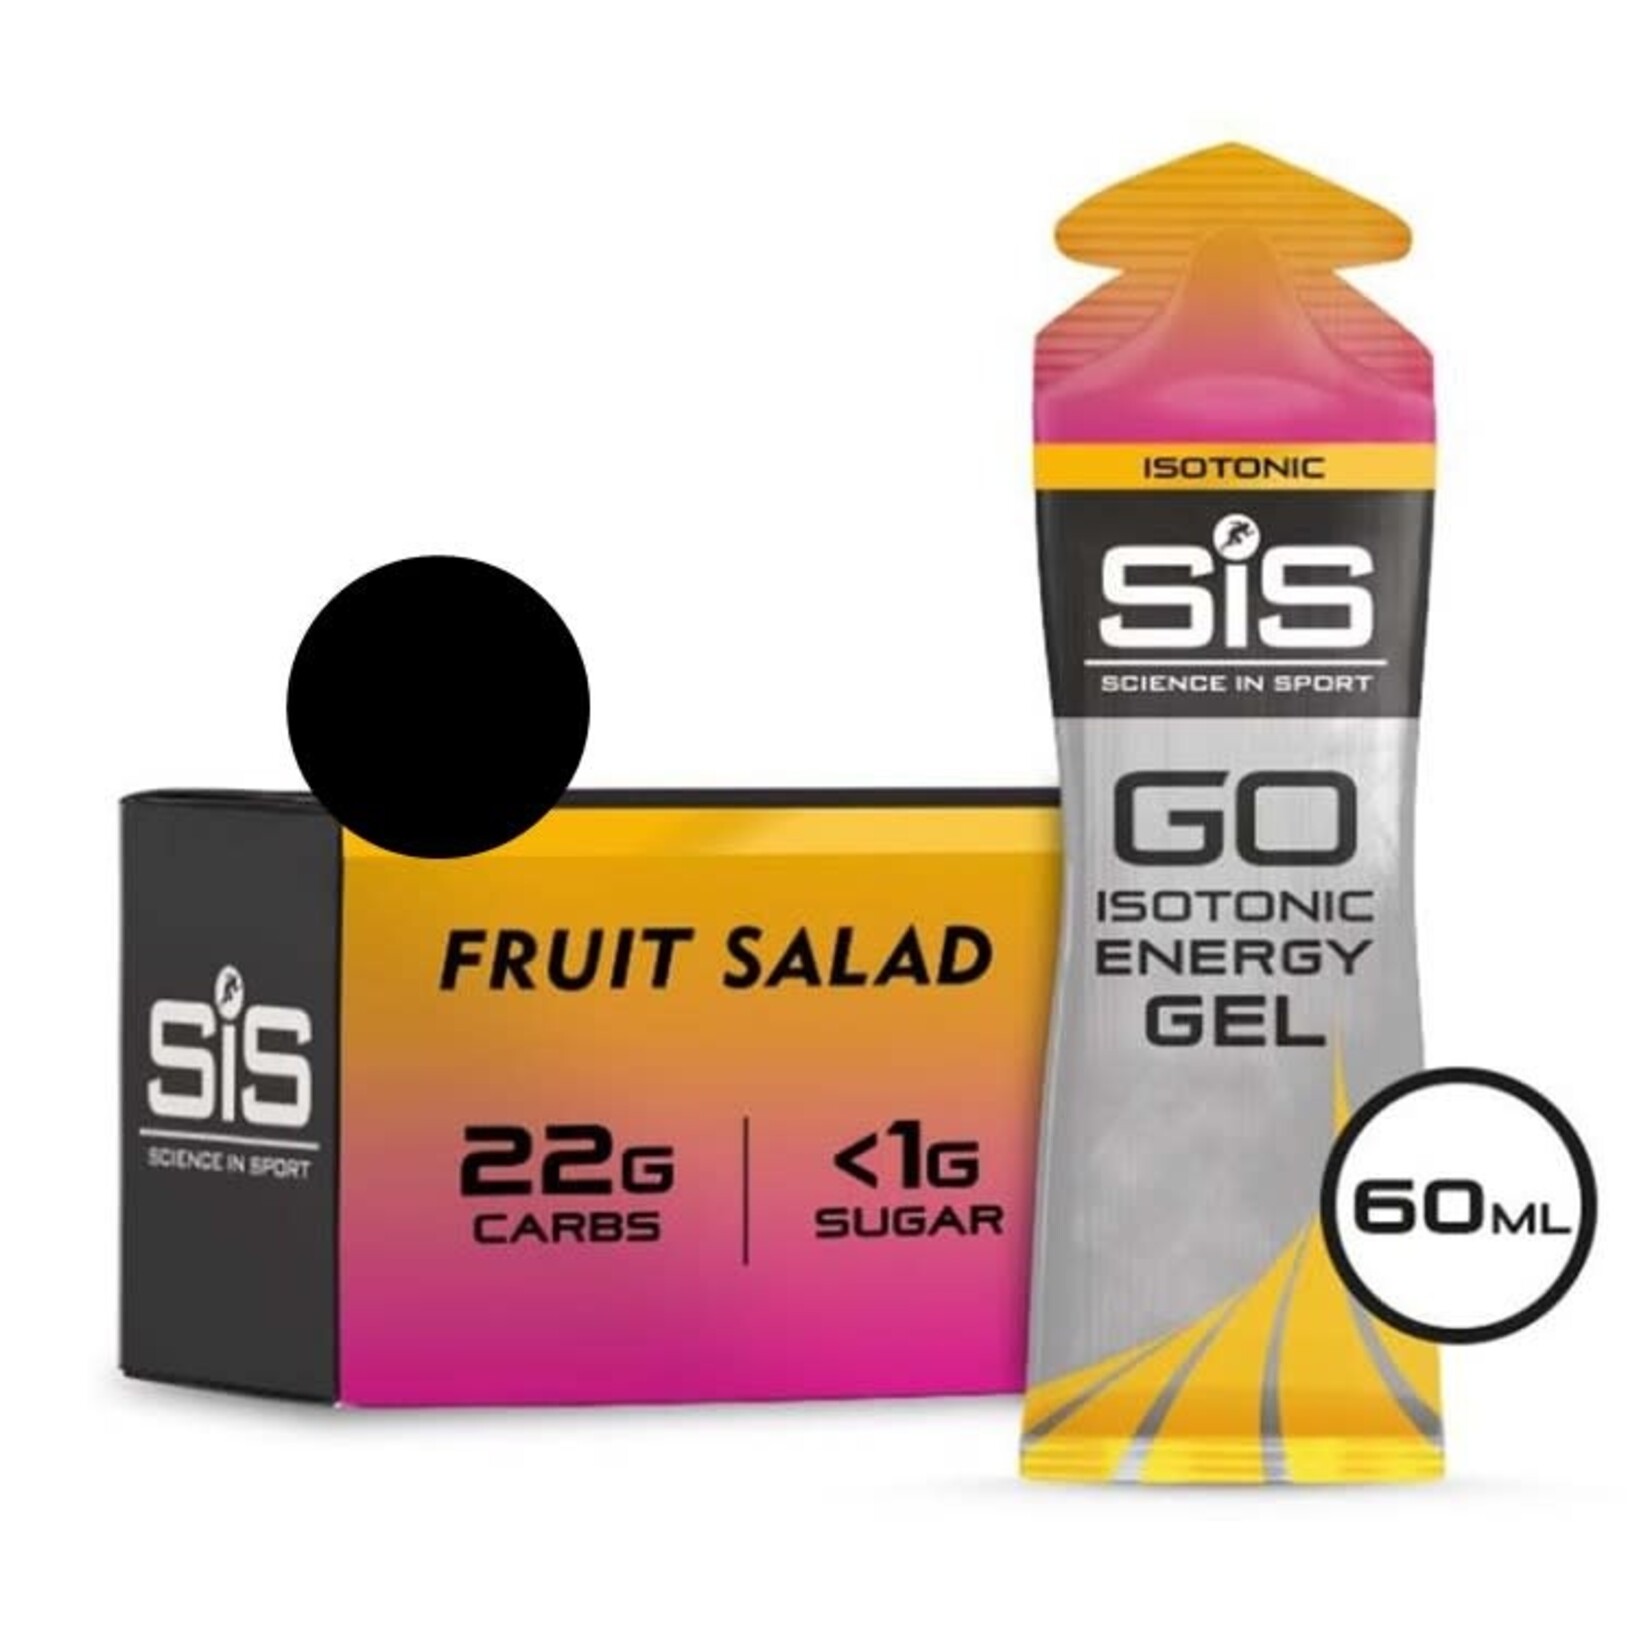 SIS SIS Go Plus Isotonic Energy Gel 60ml Fruit Salad